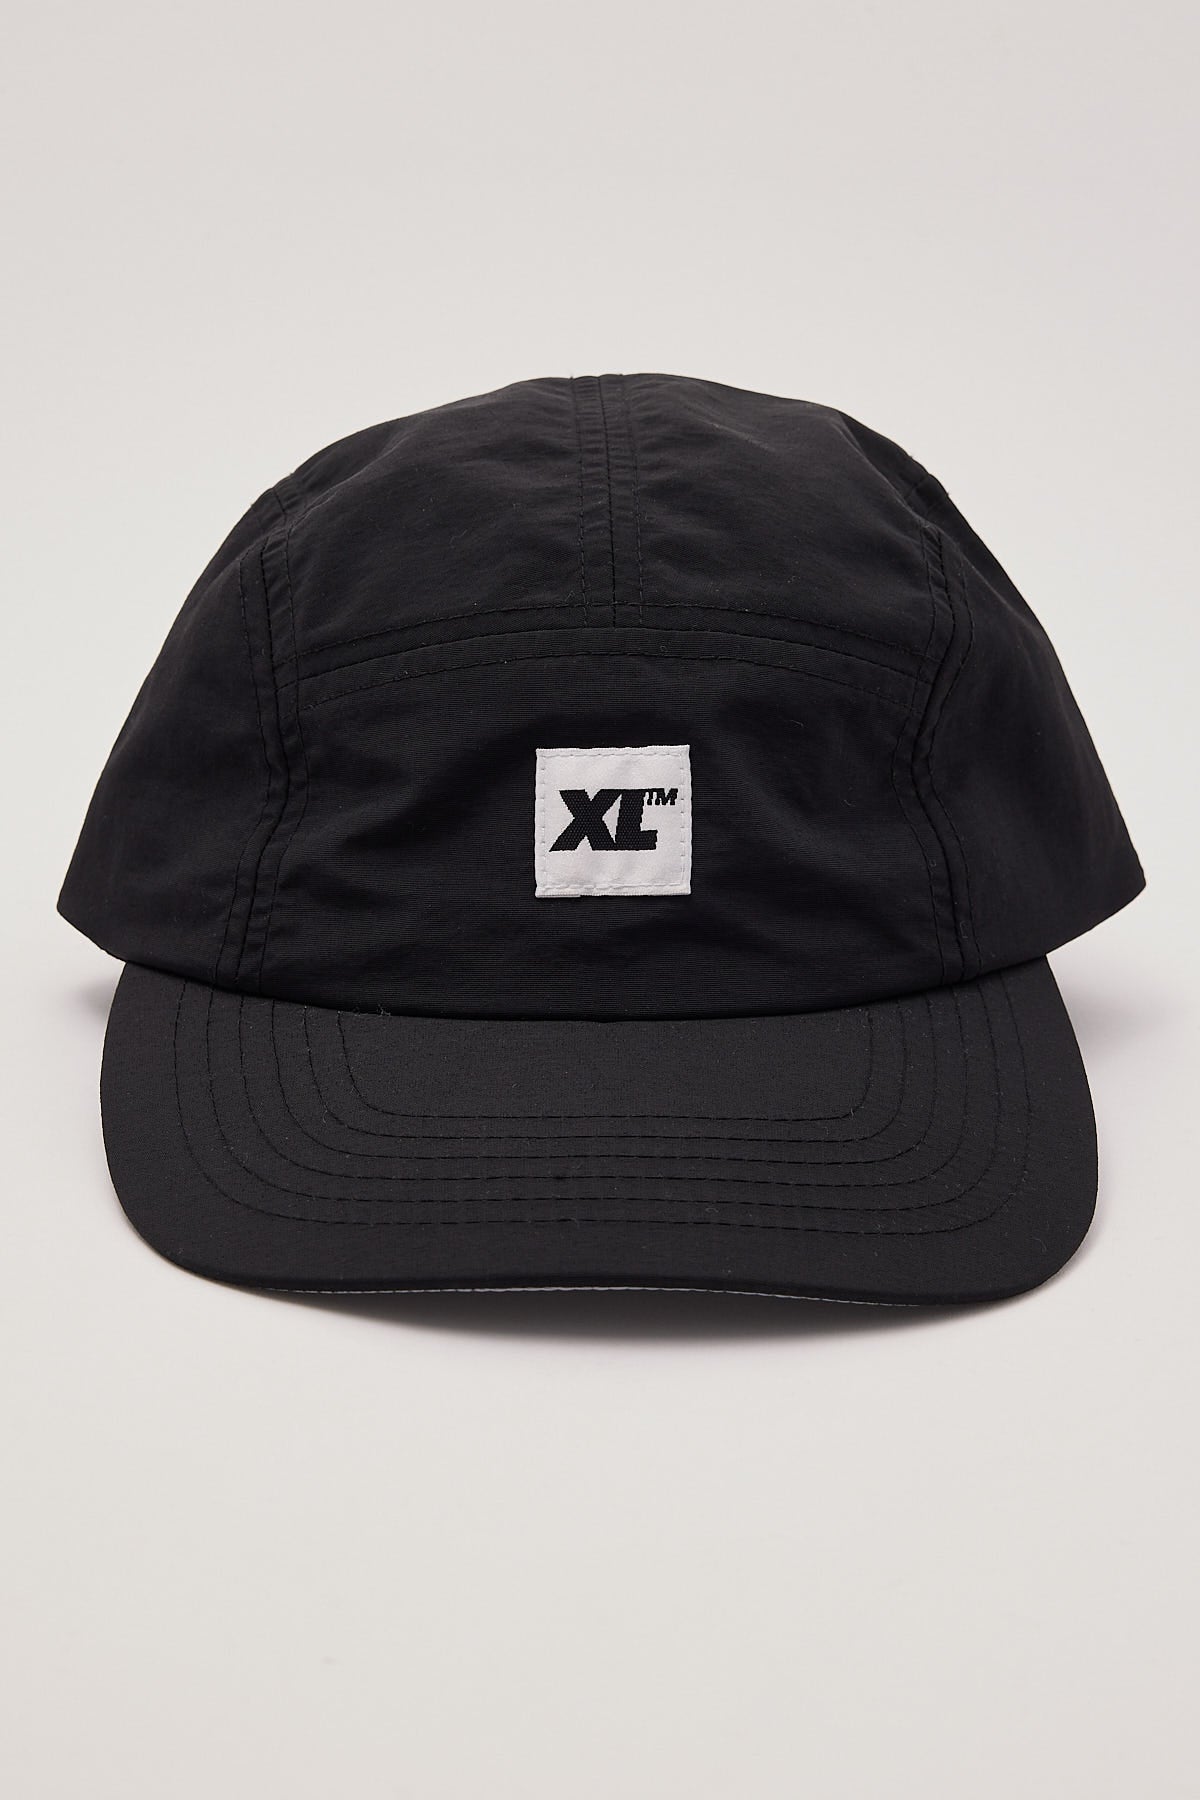 Xlarge XL Camp Cap Black